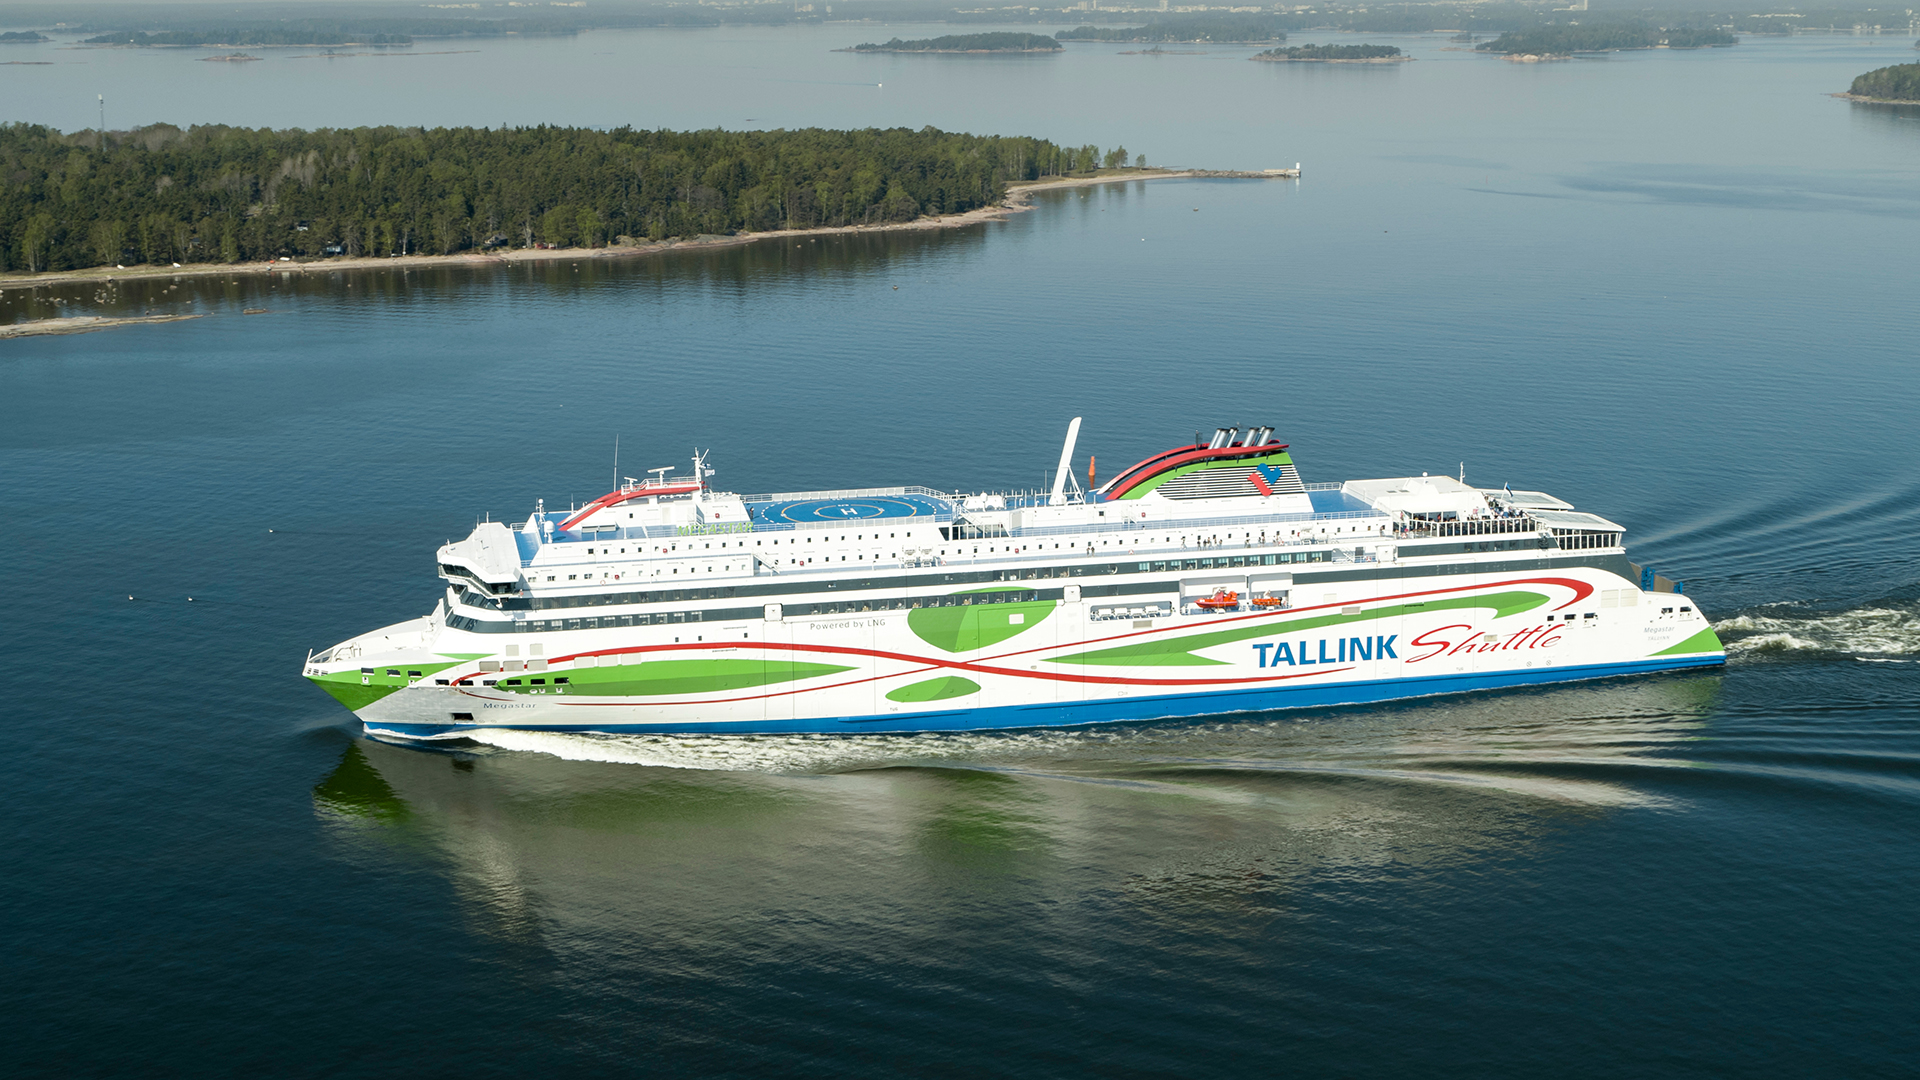 Helsinki Tallinn boat tickets I for Tallinn Open spectators